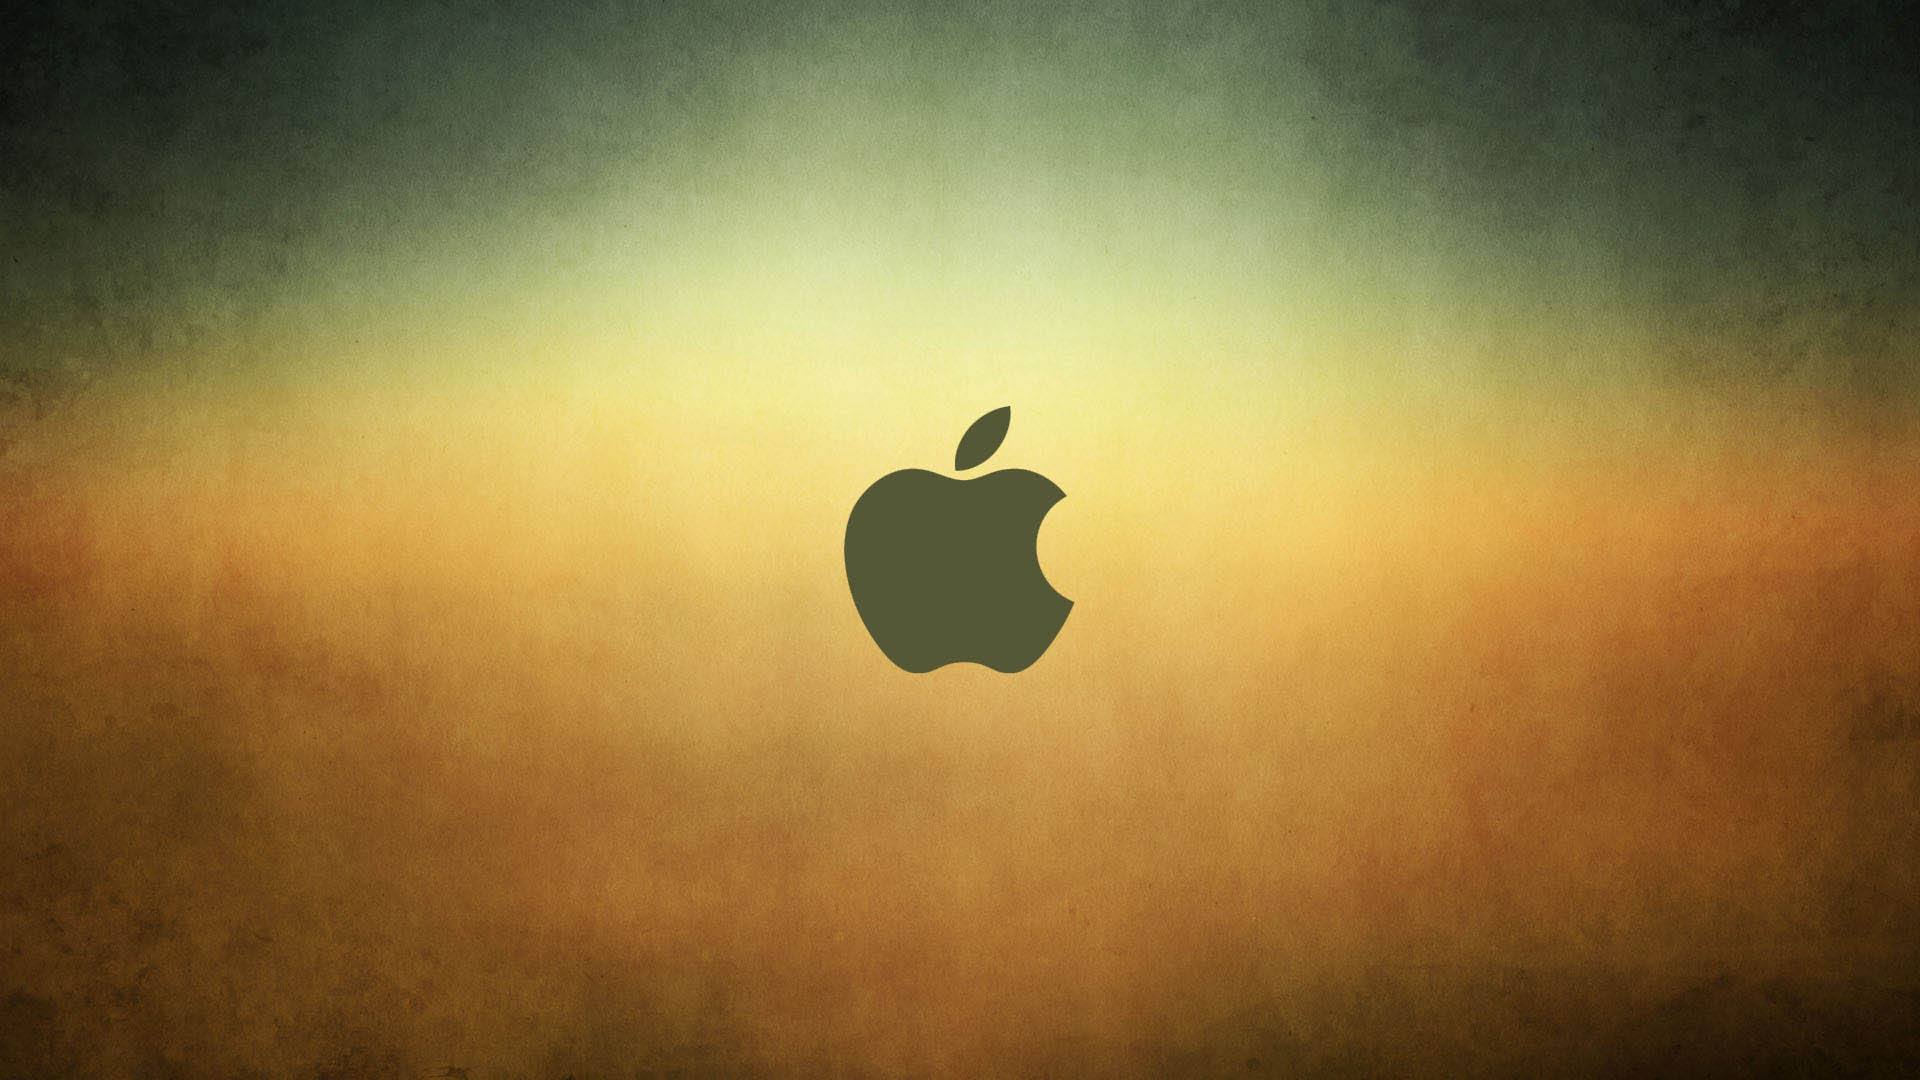 Download 15 Best Mac OS X Wallpapers HD 1920x1080